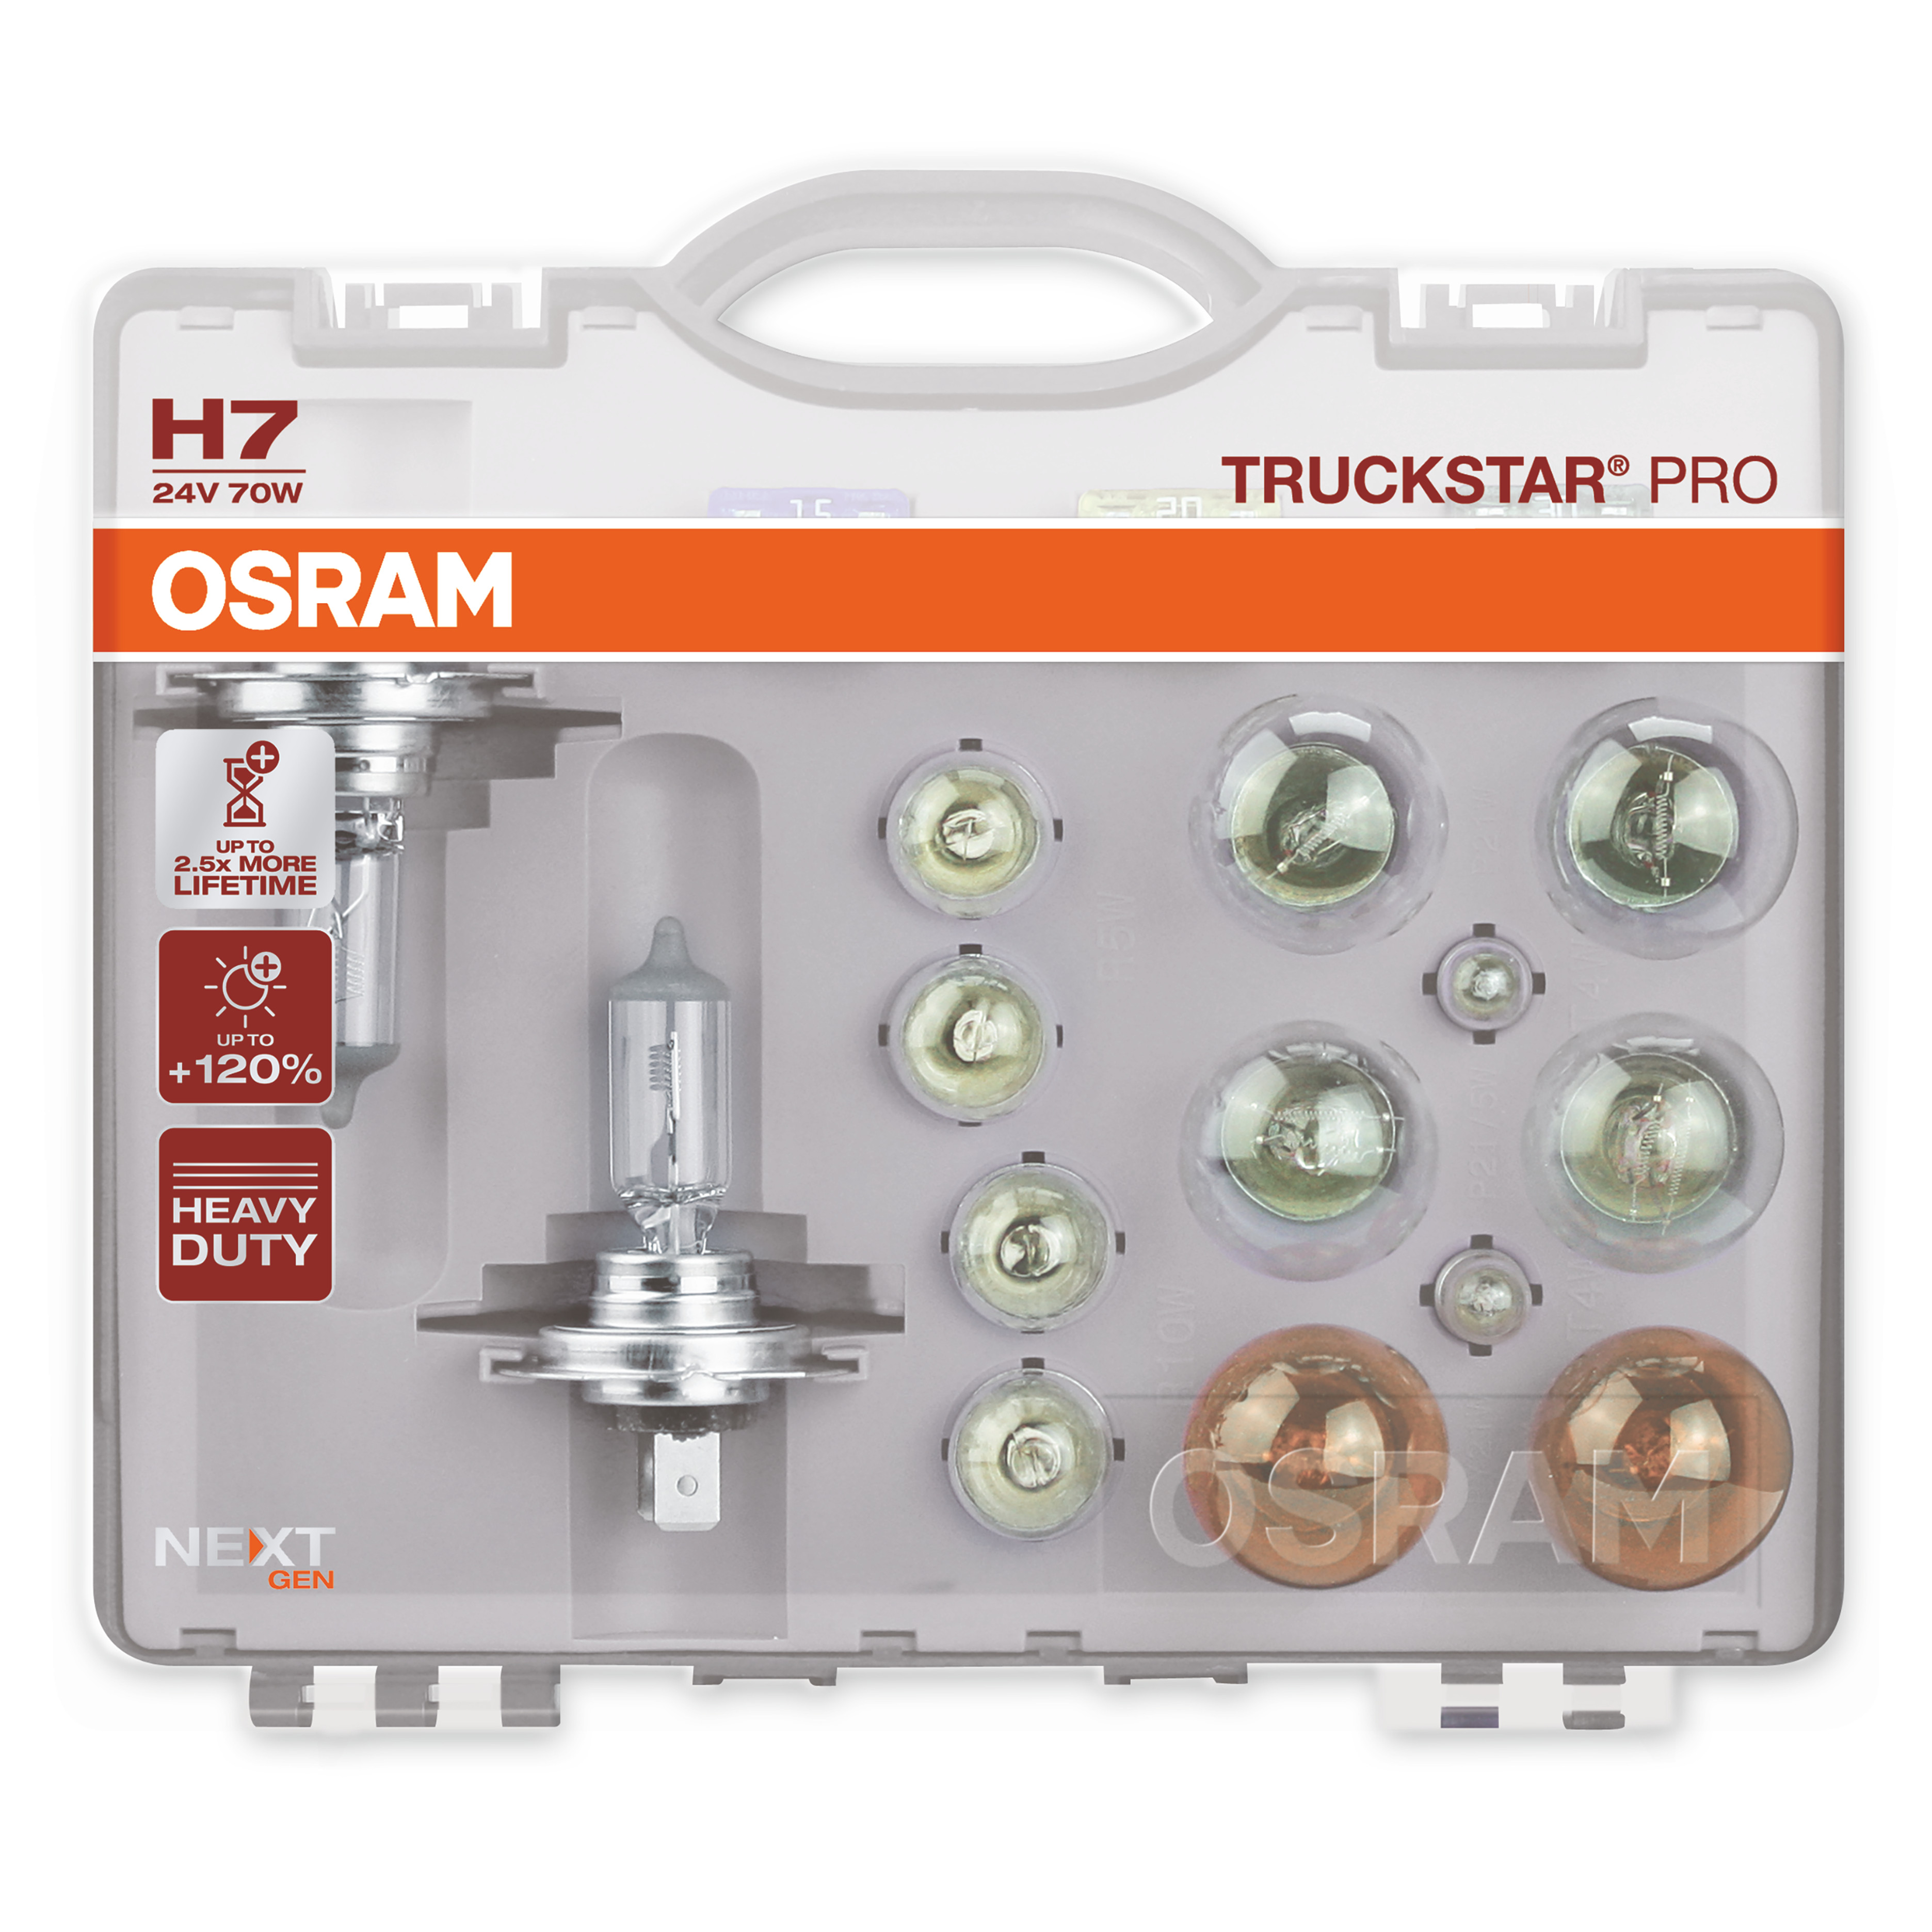 H7 24V 70W TRUCKSTAR® PRO NEXT GEN Ersatzlampenbox 1St OSRAM